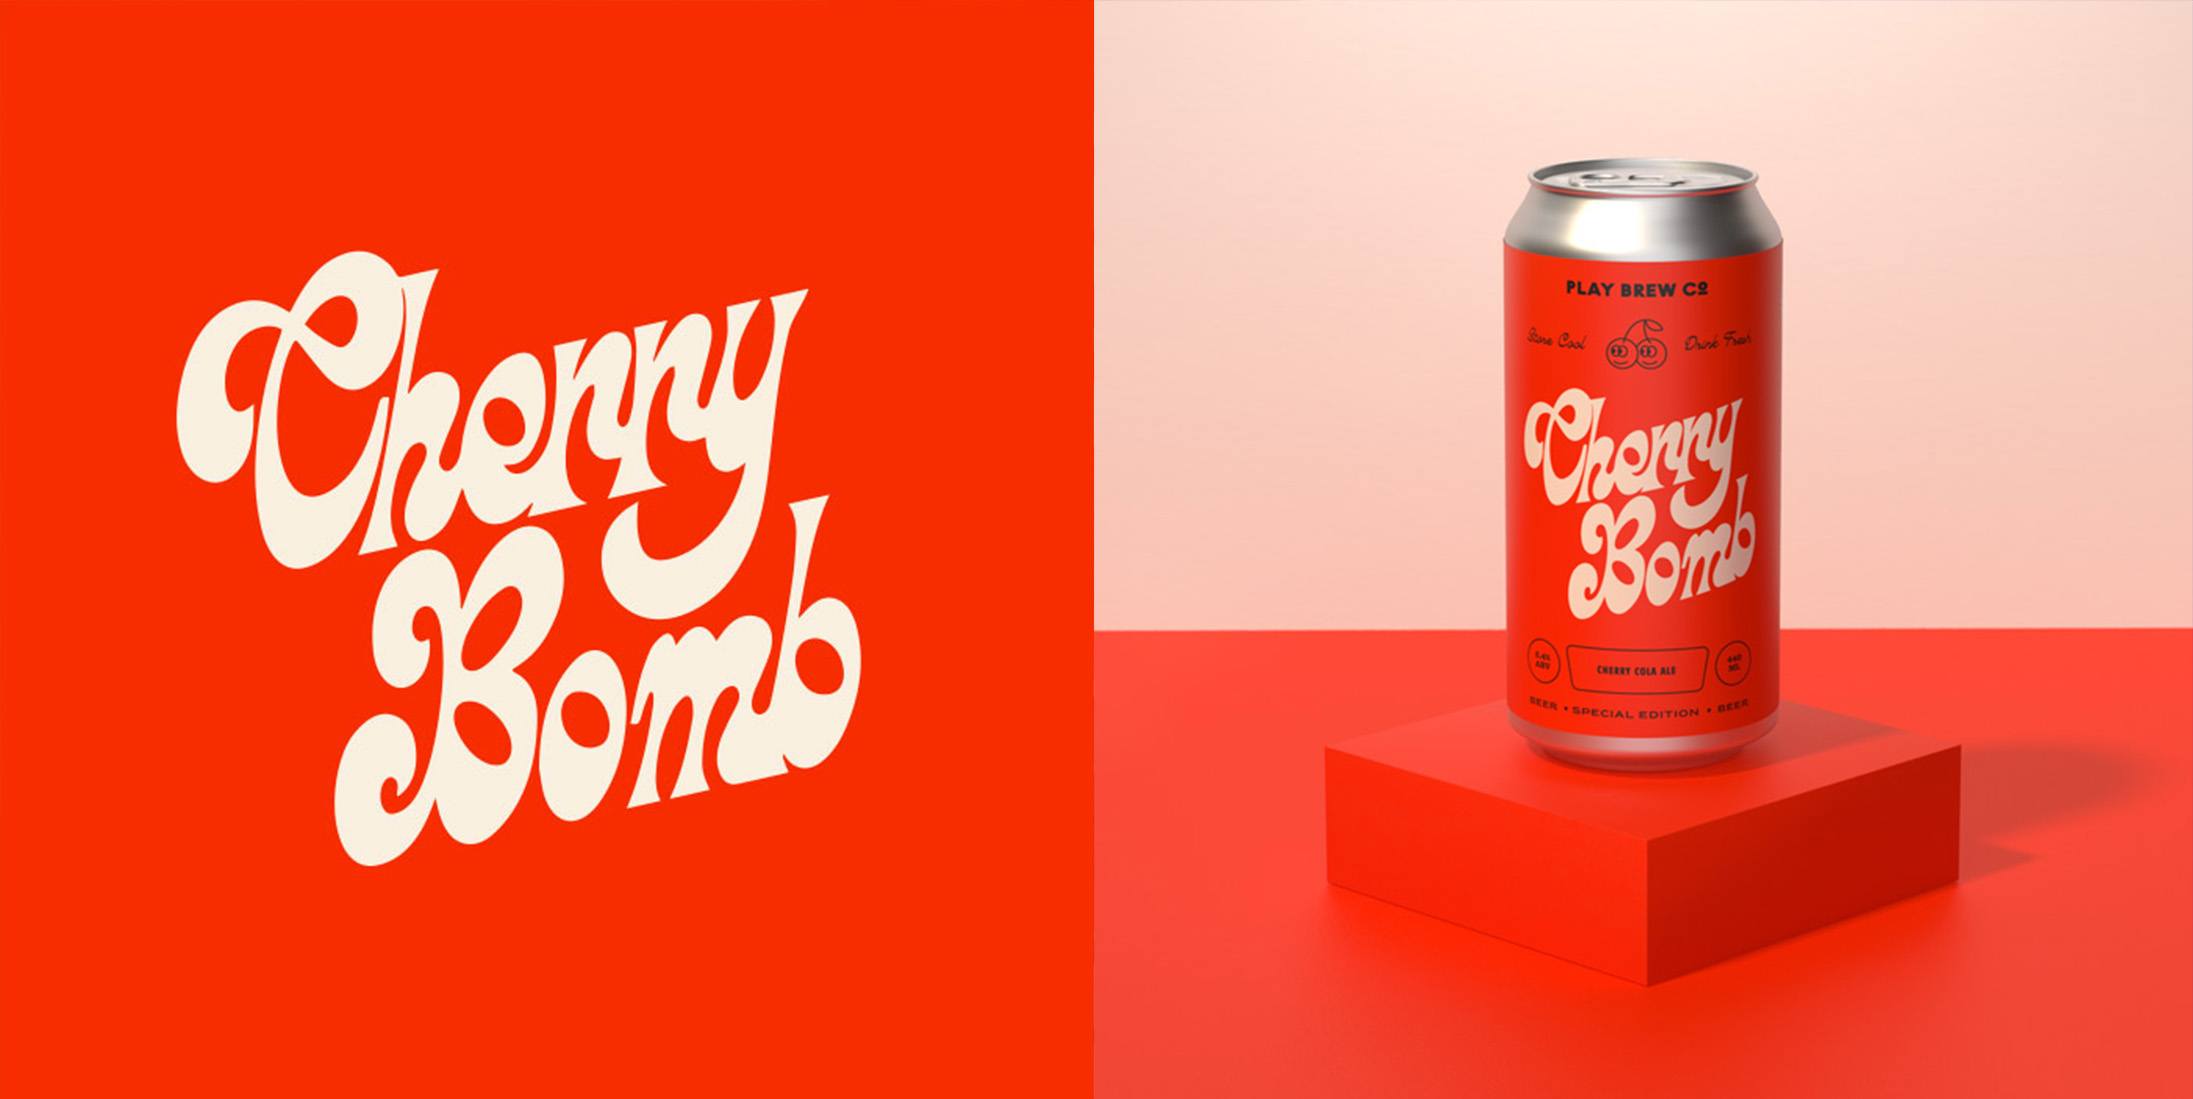 Alphabet Create Playful Nostalgic Packaging Design for Cherry Cola Ale